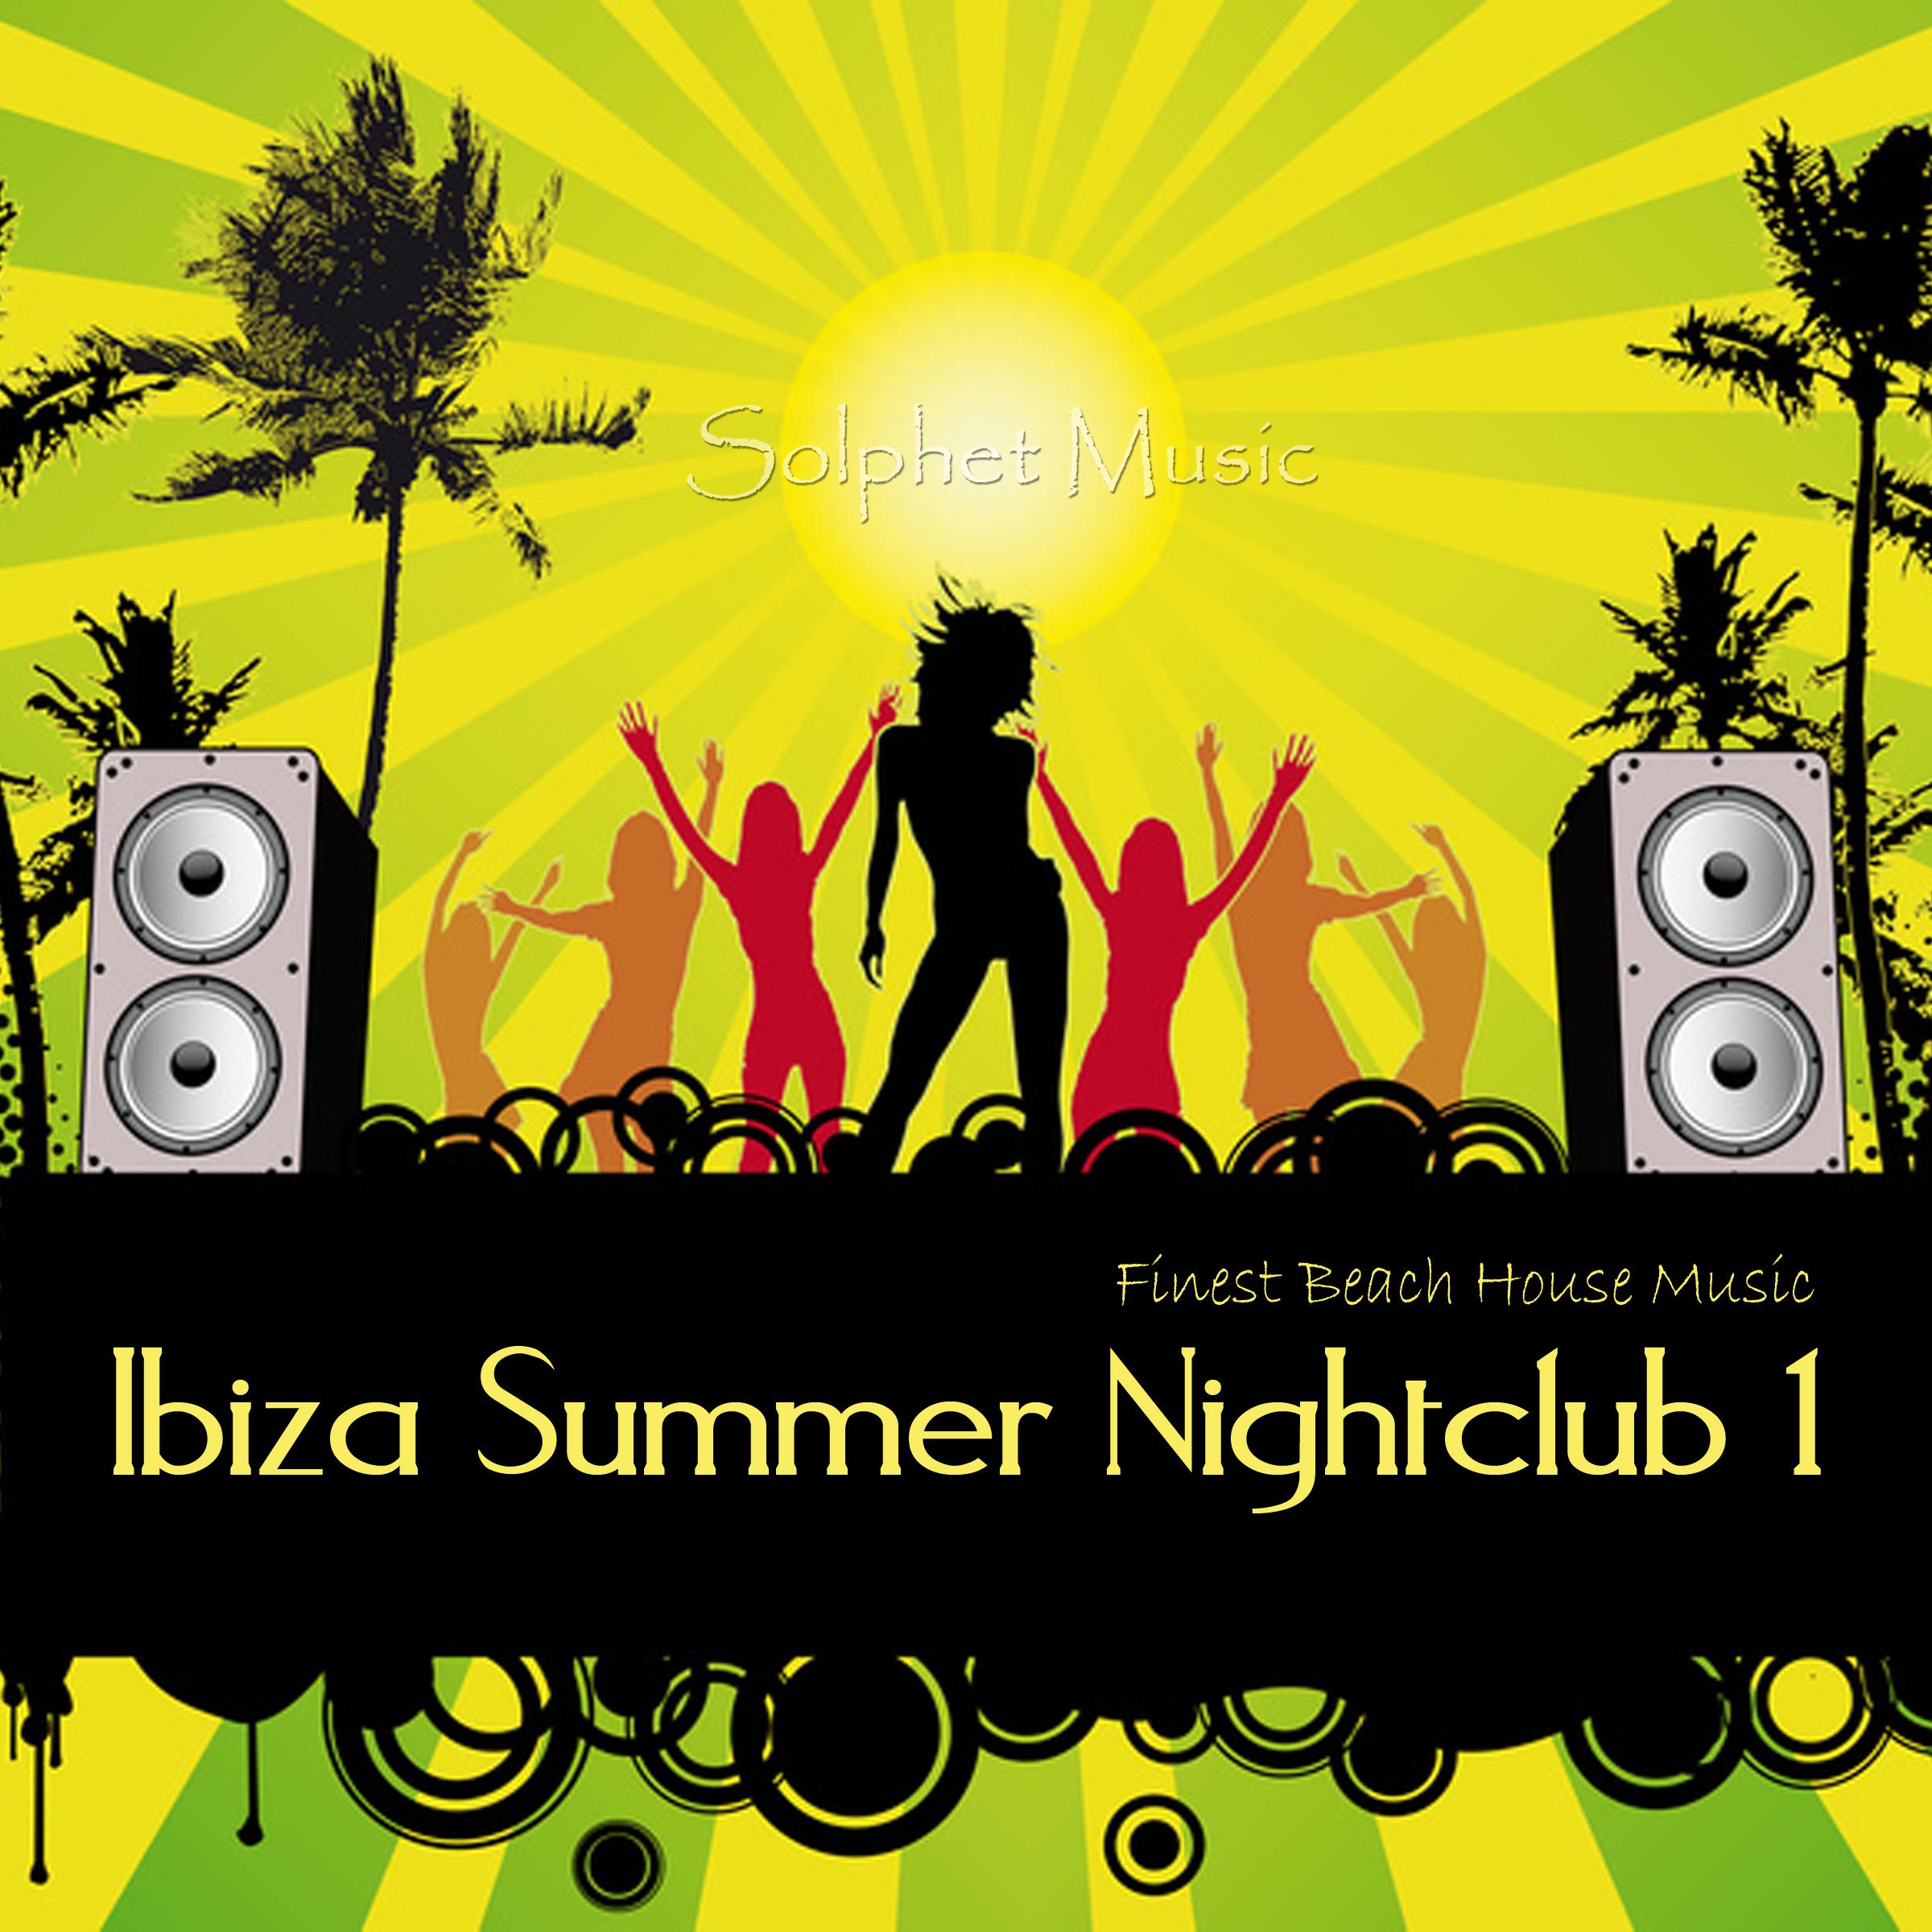 Ibiza Summer Nightclub 1 (Finest Beach House Music)